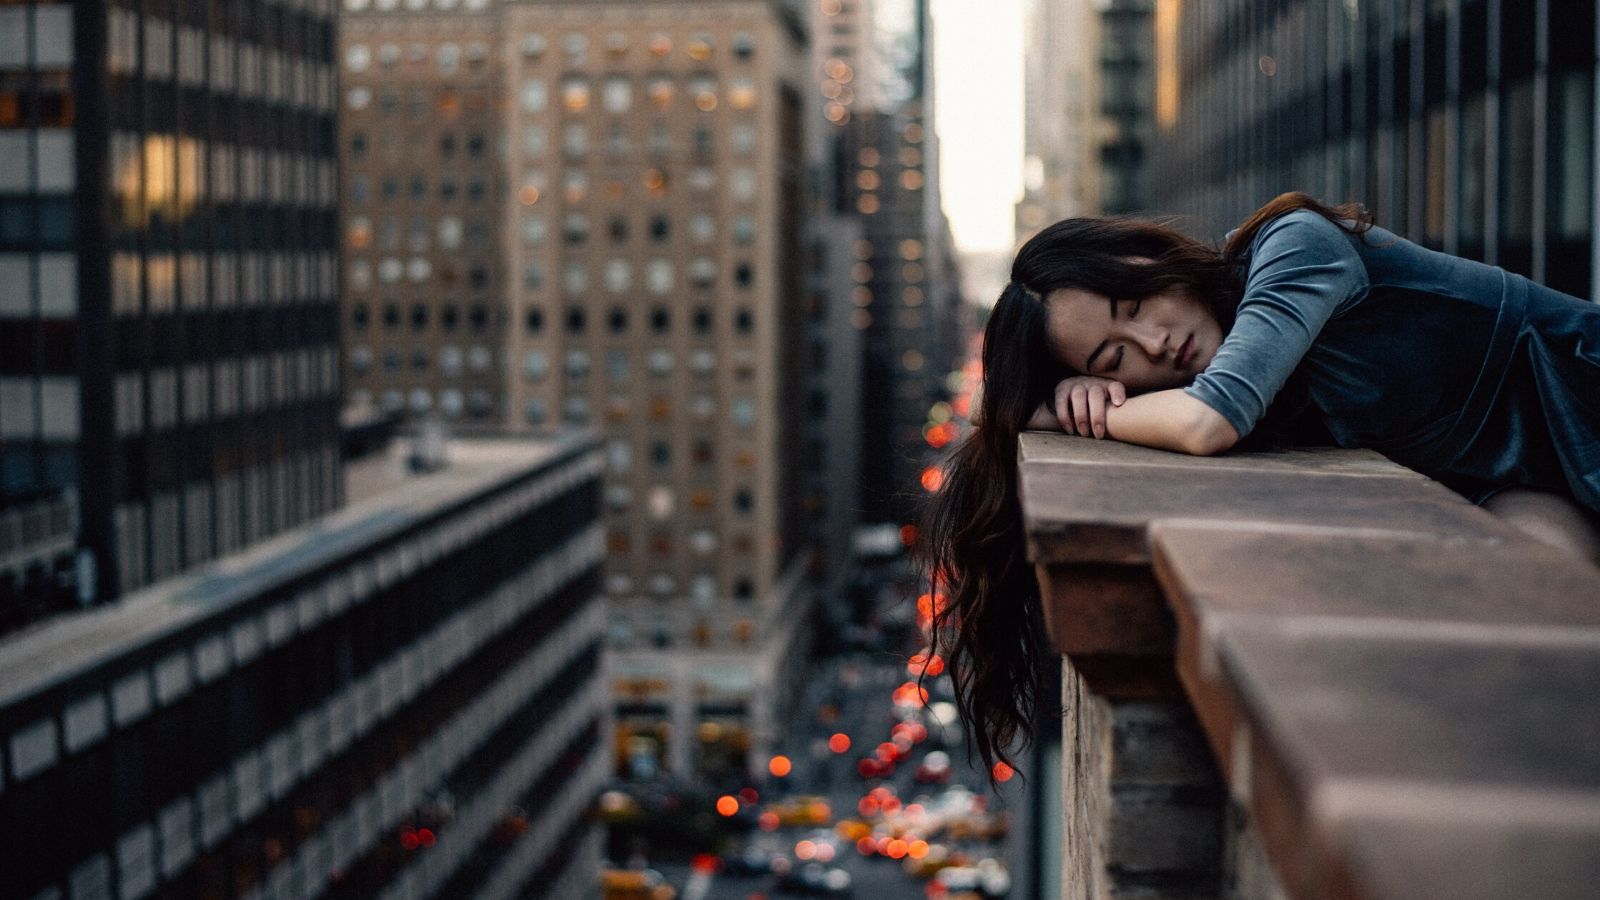 A woman sleeps on the balcony of an apartment building.